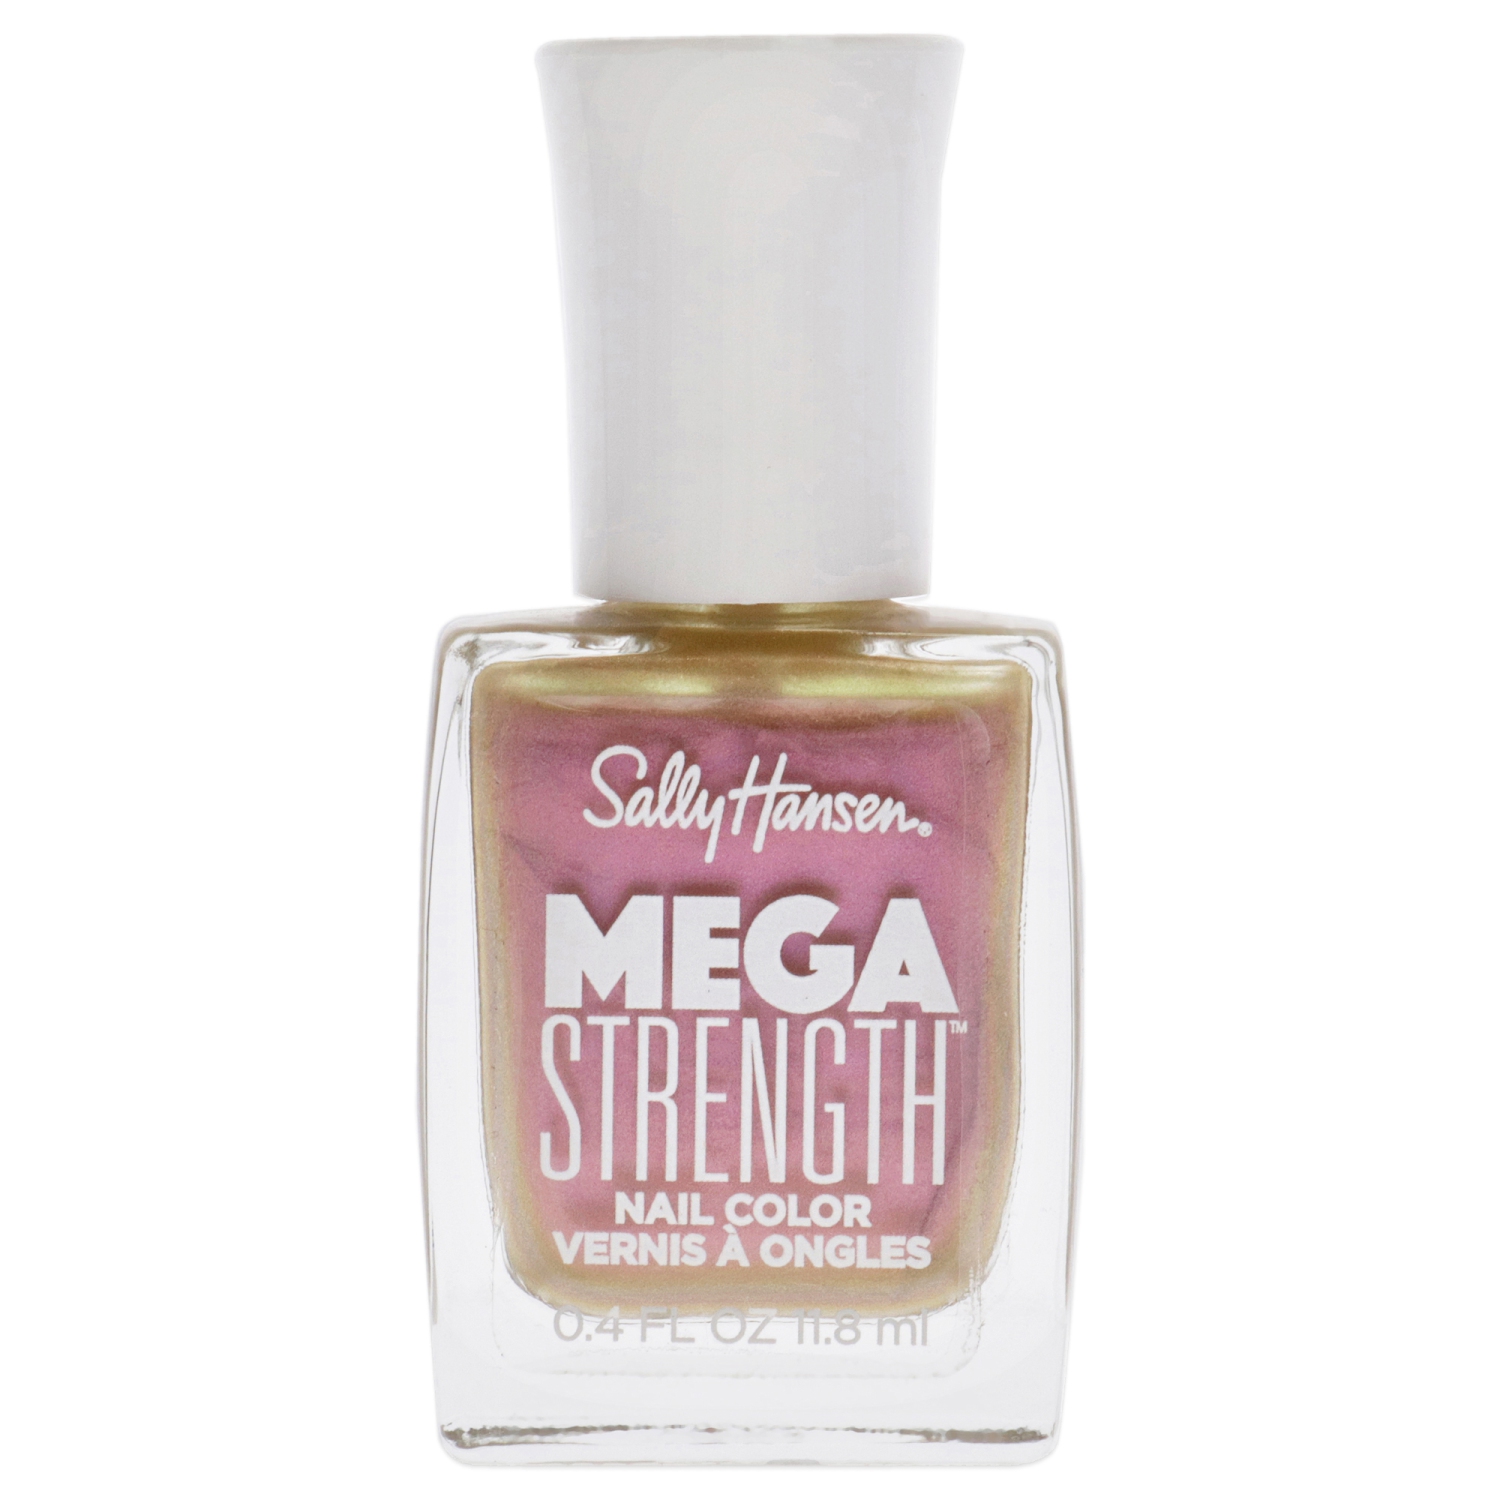 Mega Strength Nail Color - 016 Always Extra by Sally Hansen for Women - 0.4 oz Nail Polish